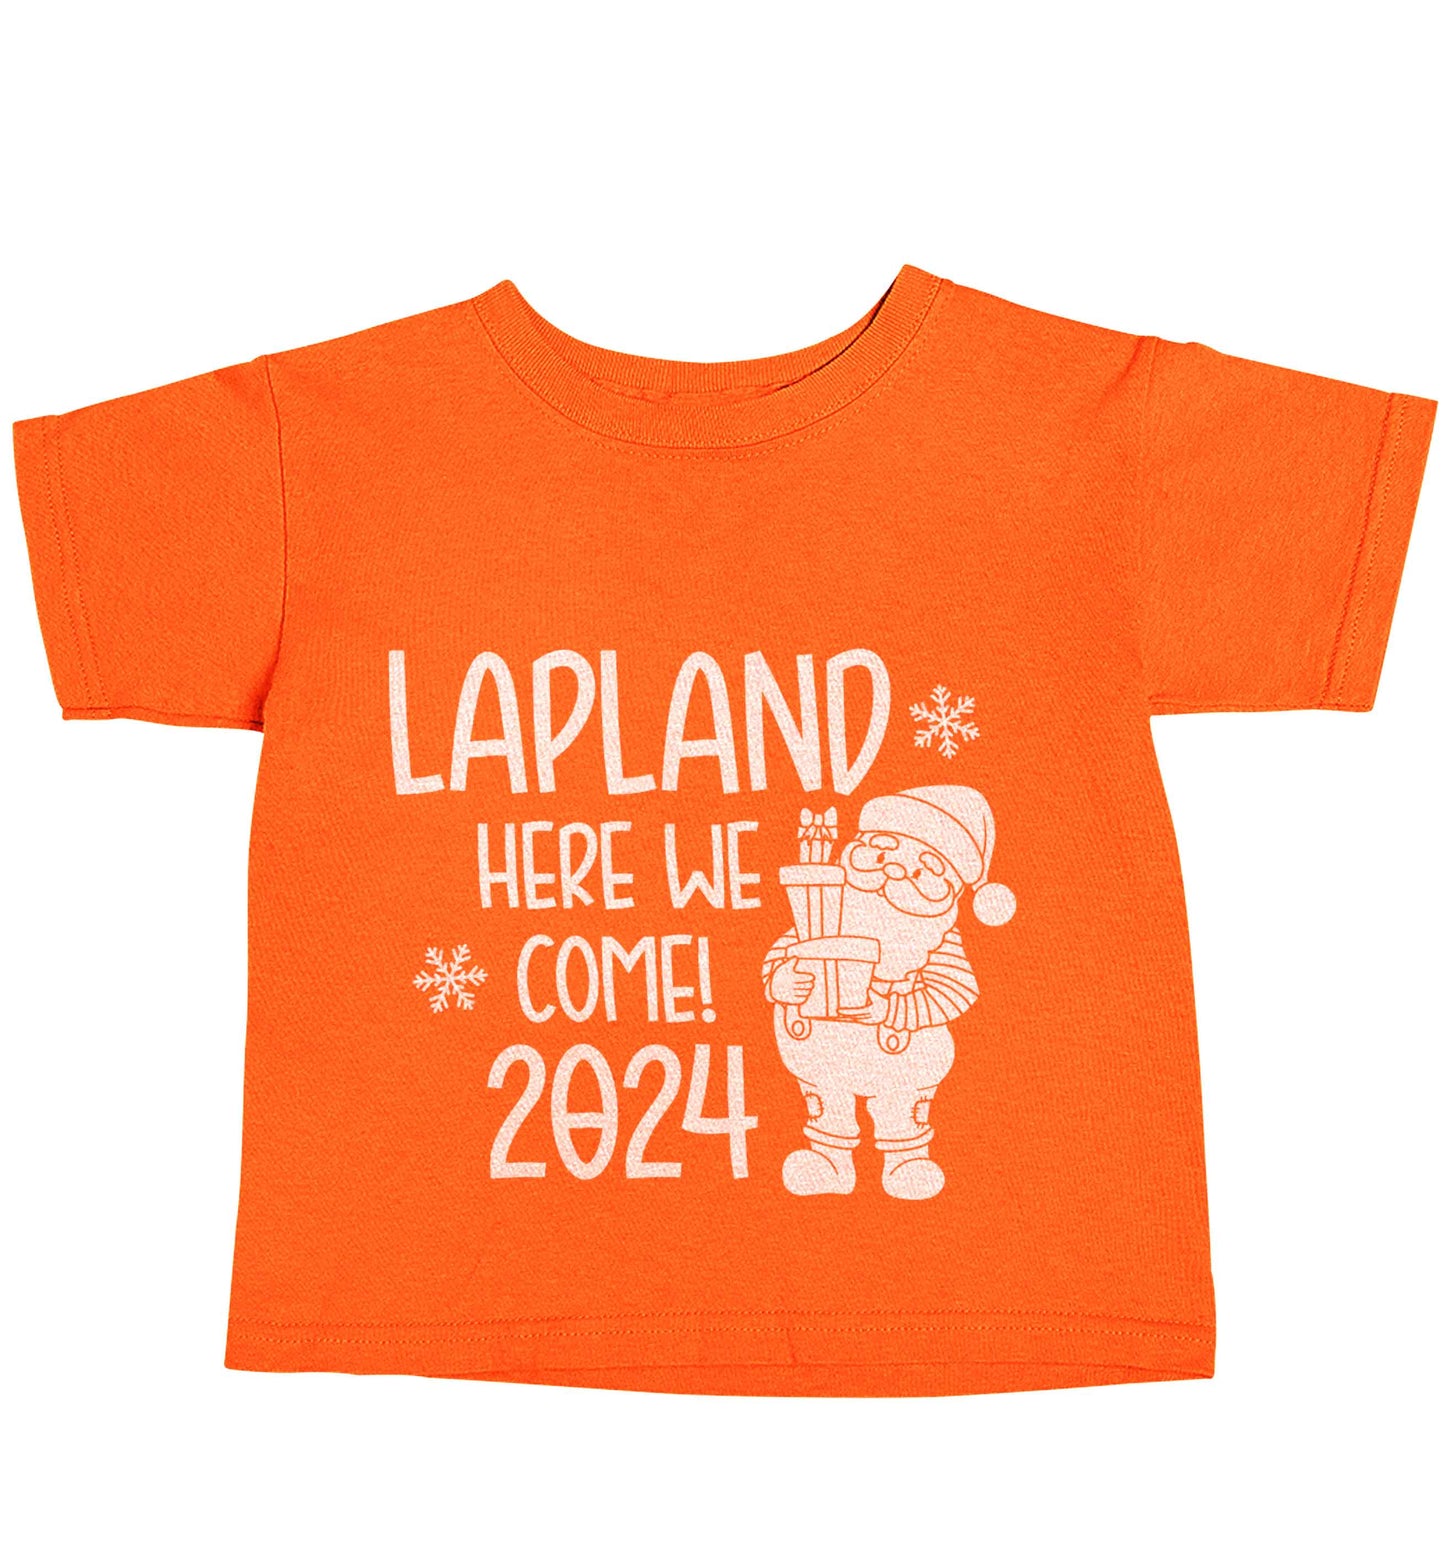 Lapland here we come orange baby toddler Tshirt 2 Years